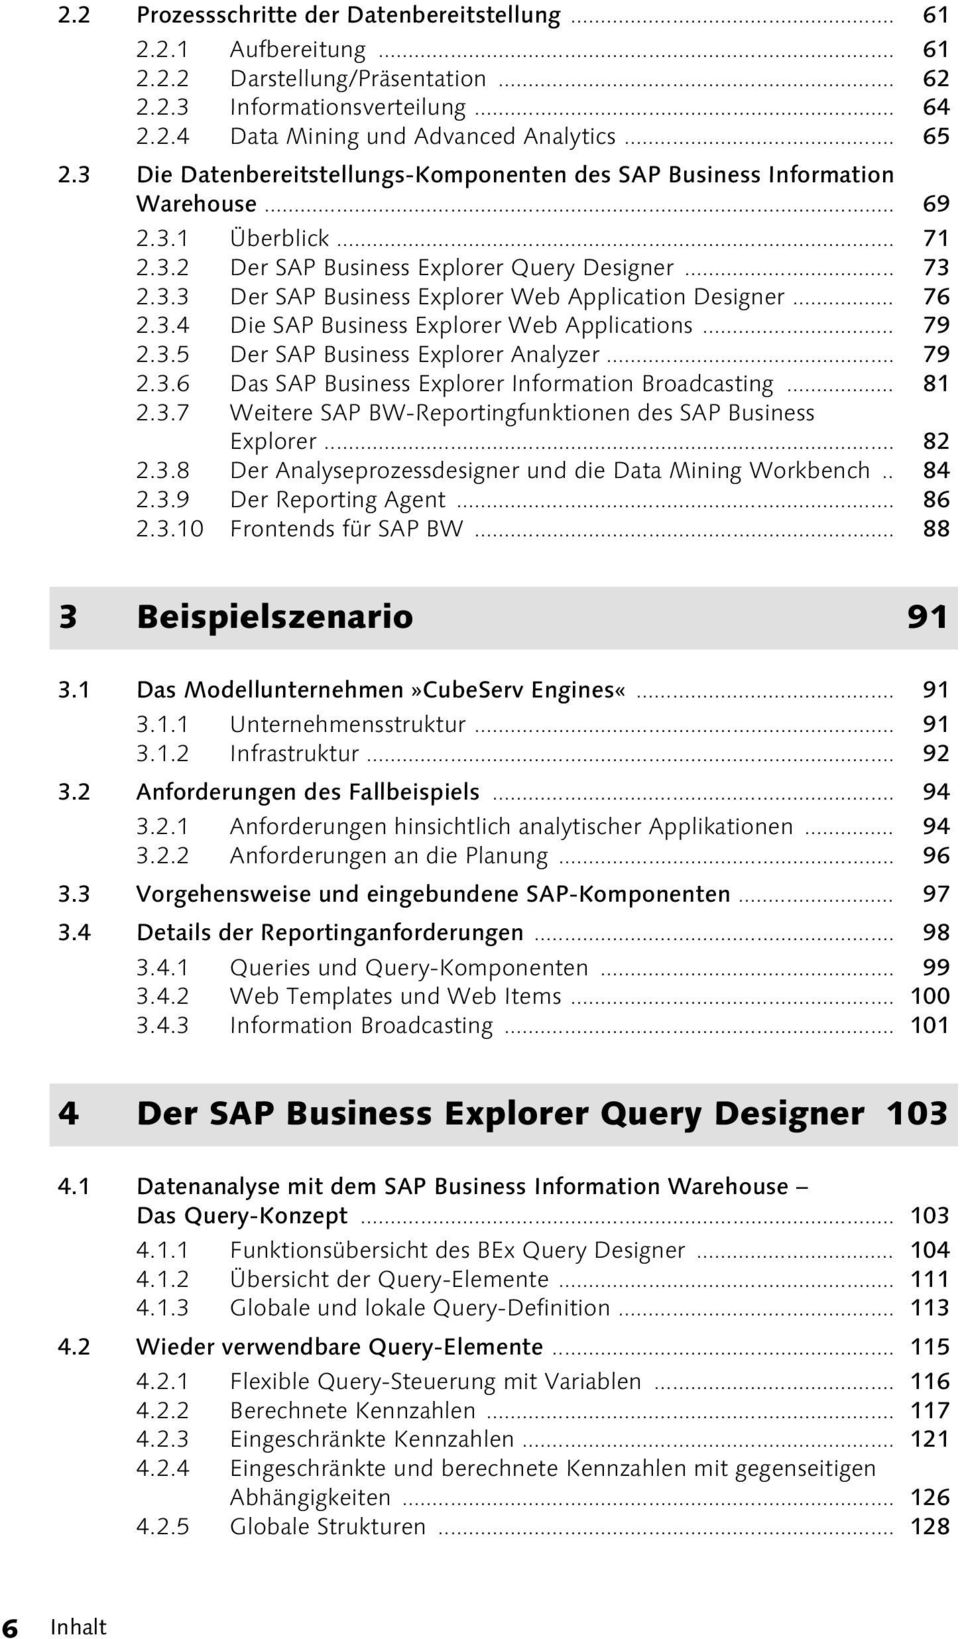 .. 76 2.3.4 Die SAP Business Explorer Web Applications... 79 2.3.5 Der SAP Business Explorer Analyzer... 79 2.3.6 Das SAP Business Explorer Information Broadcasting... 81 2.3.7 Weitere SAP BW-Reportingfunktionen des SAP Business Explorer.